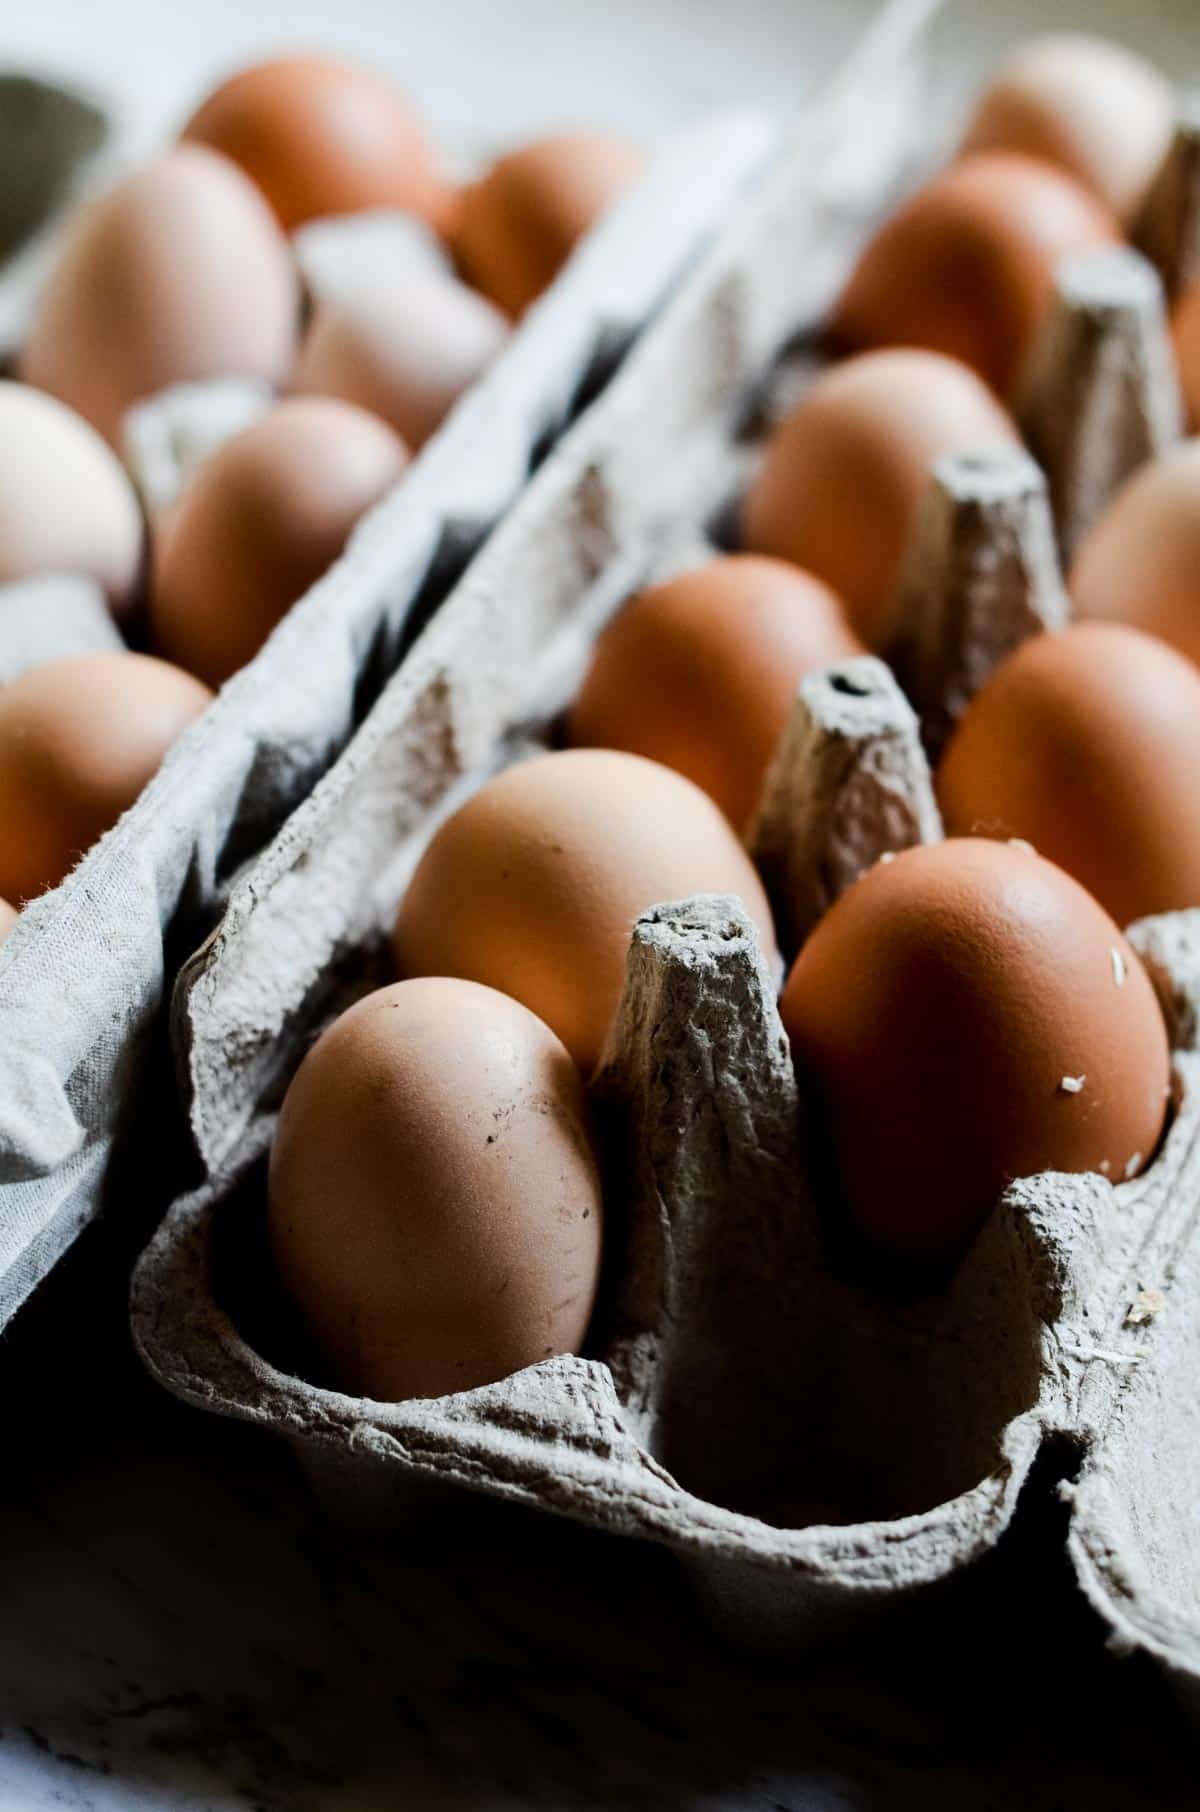 Farm eggs in an egg carton. 